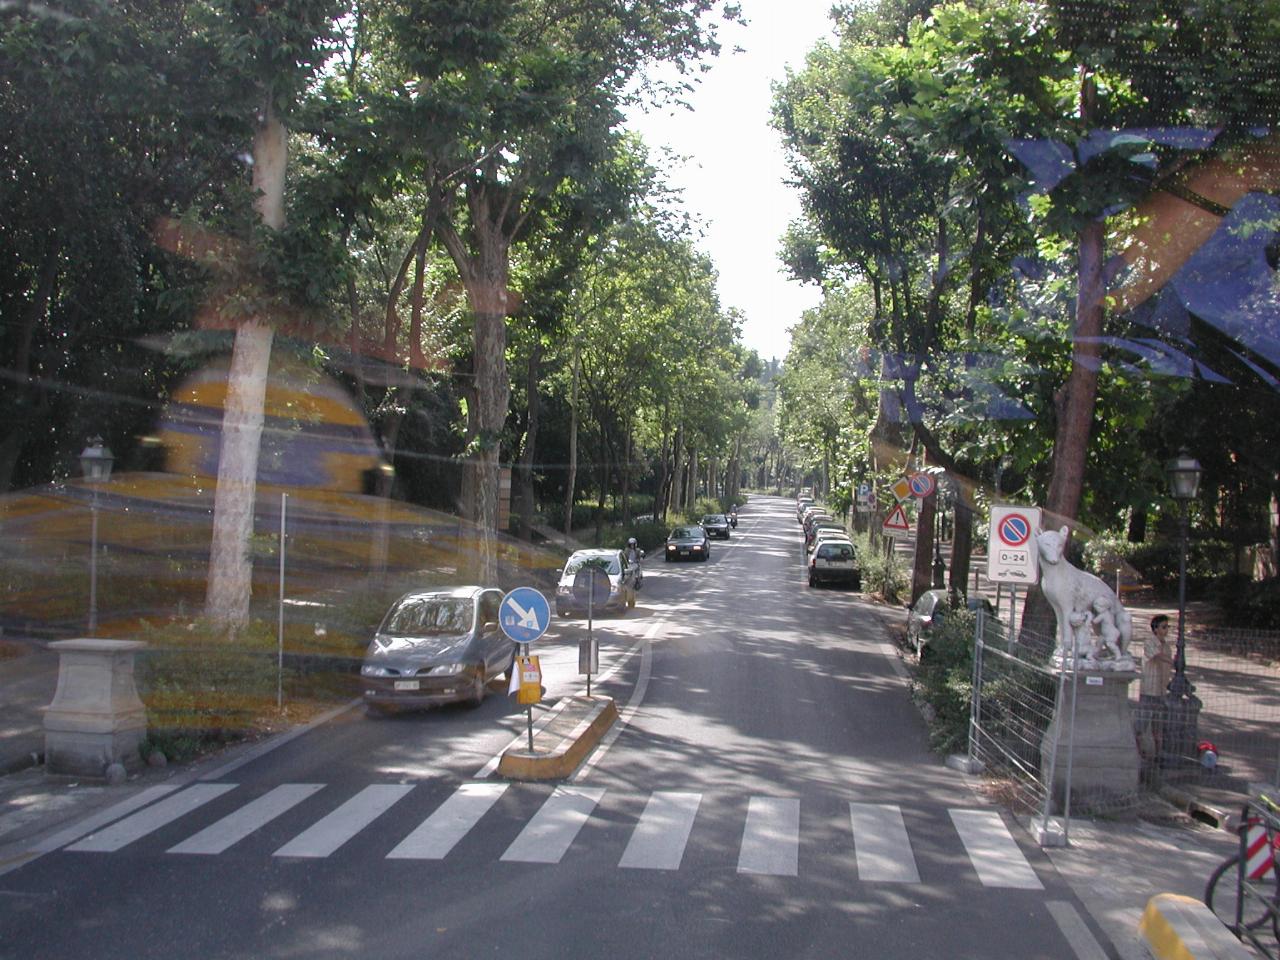 Road to Piazzale Michelangelo runs through park like properties